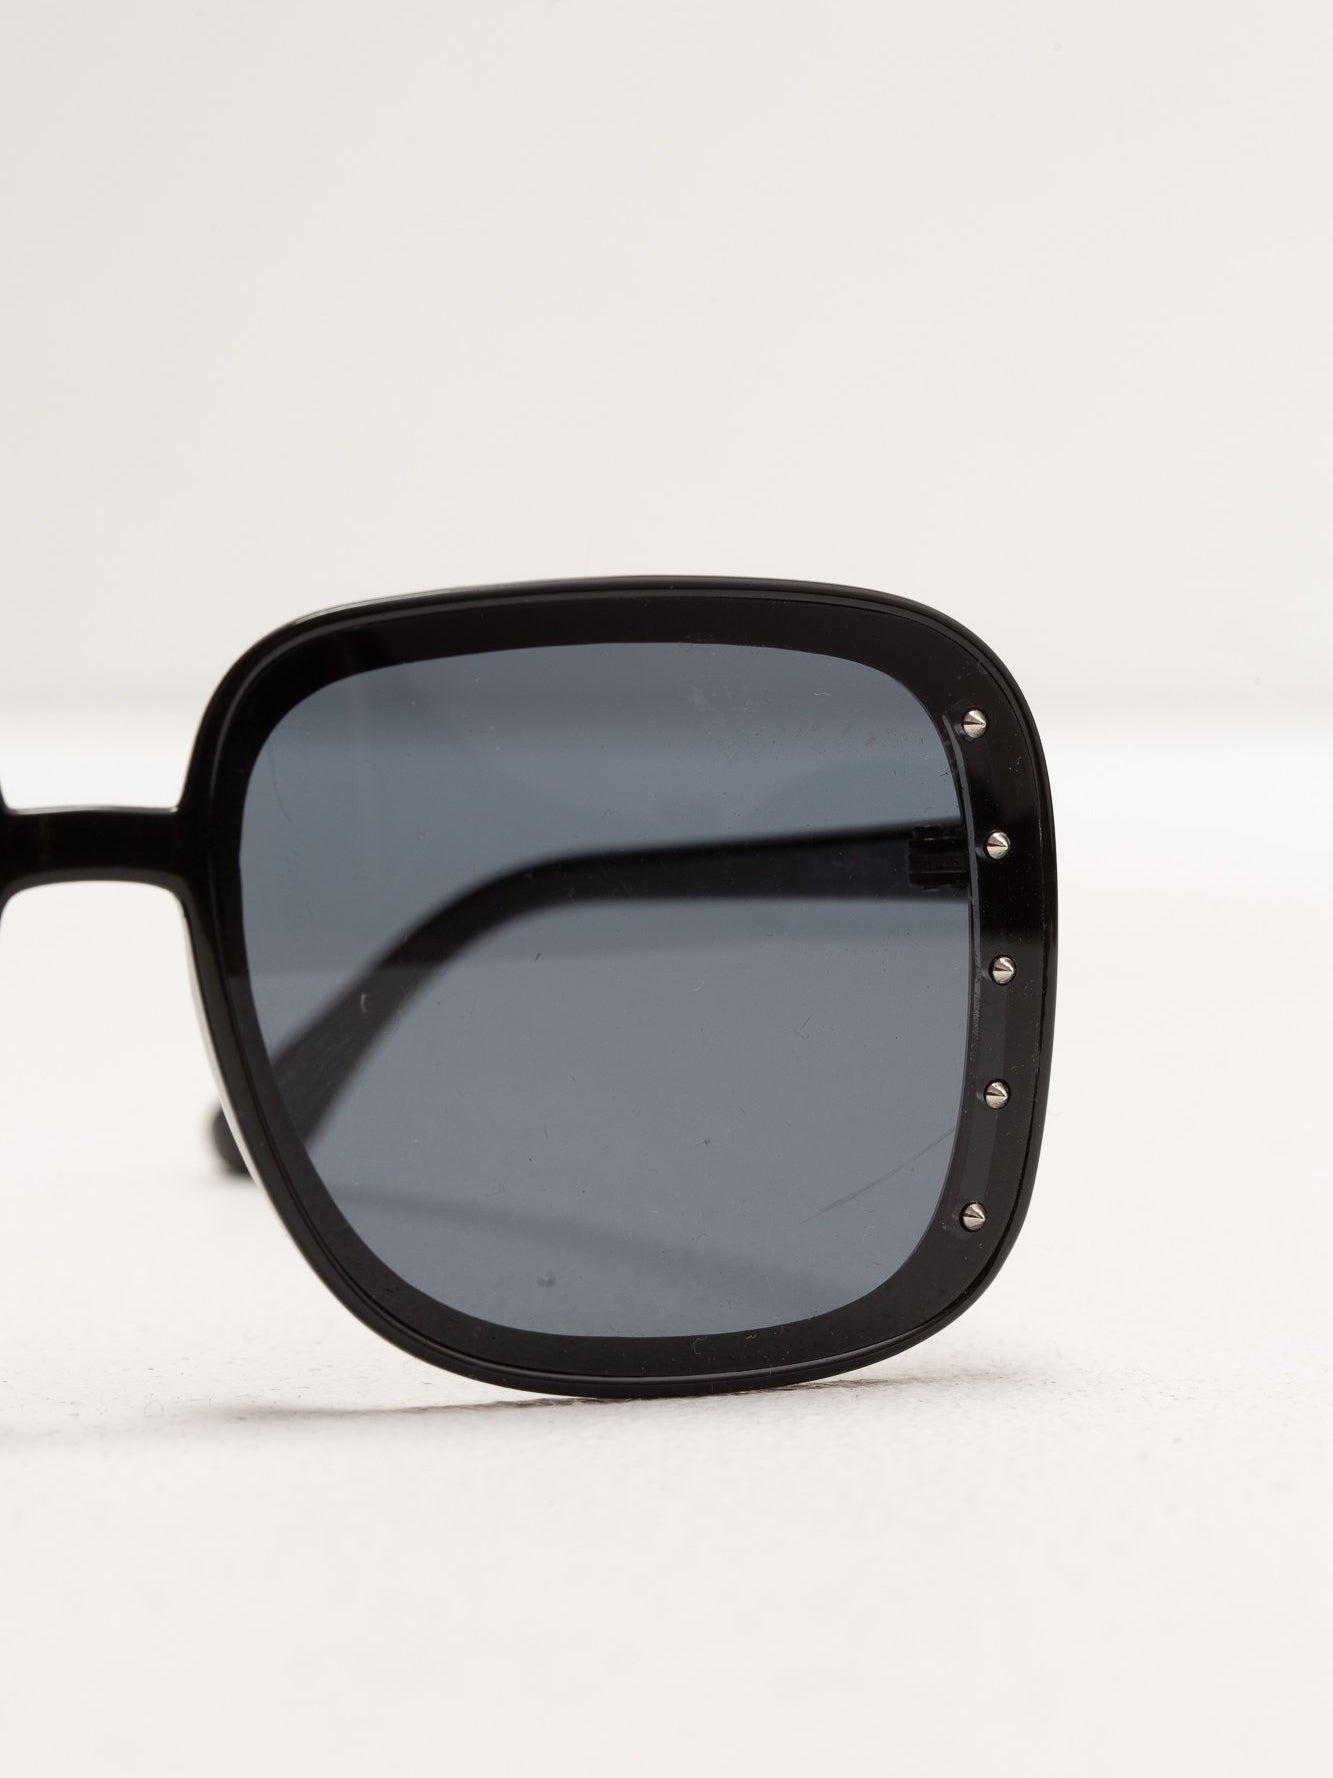 Sunglasses - Strass Frame